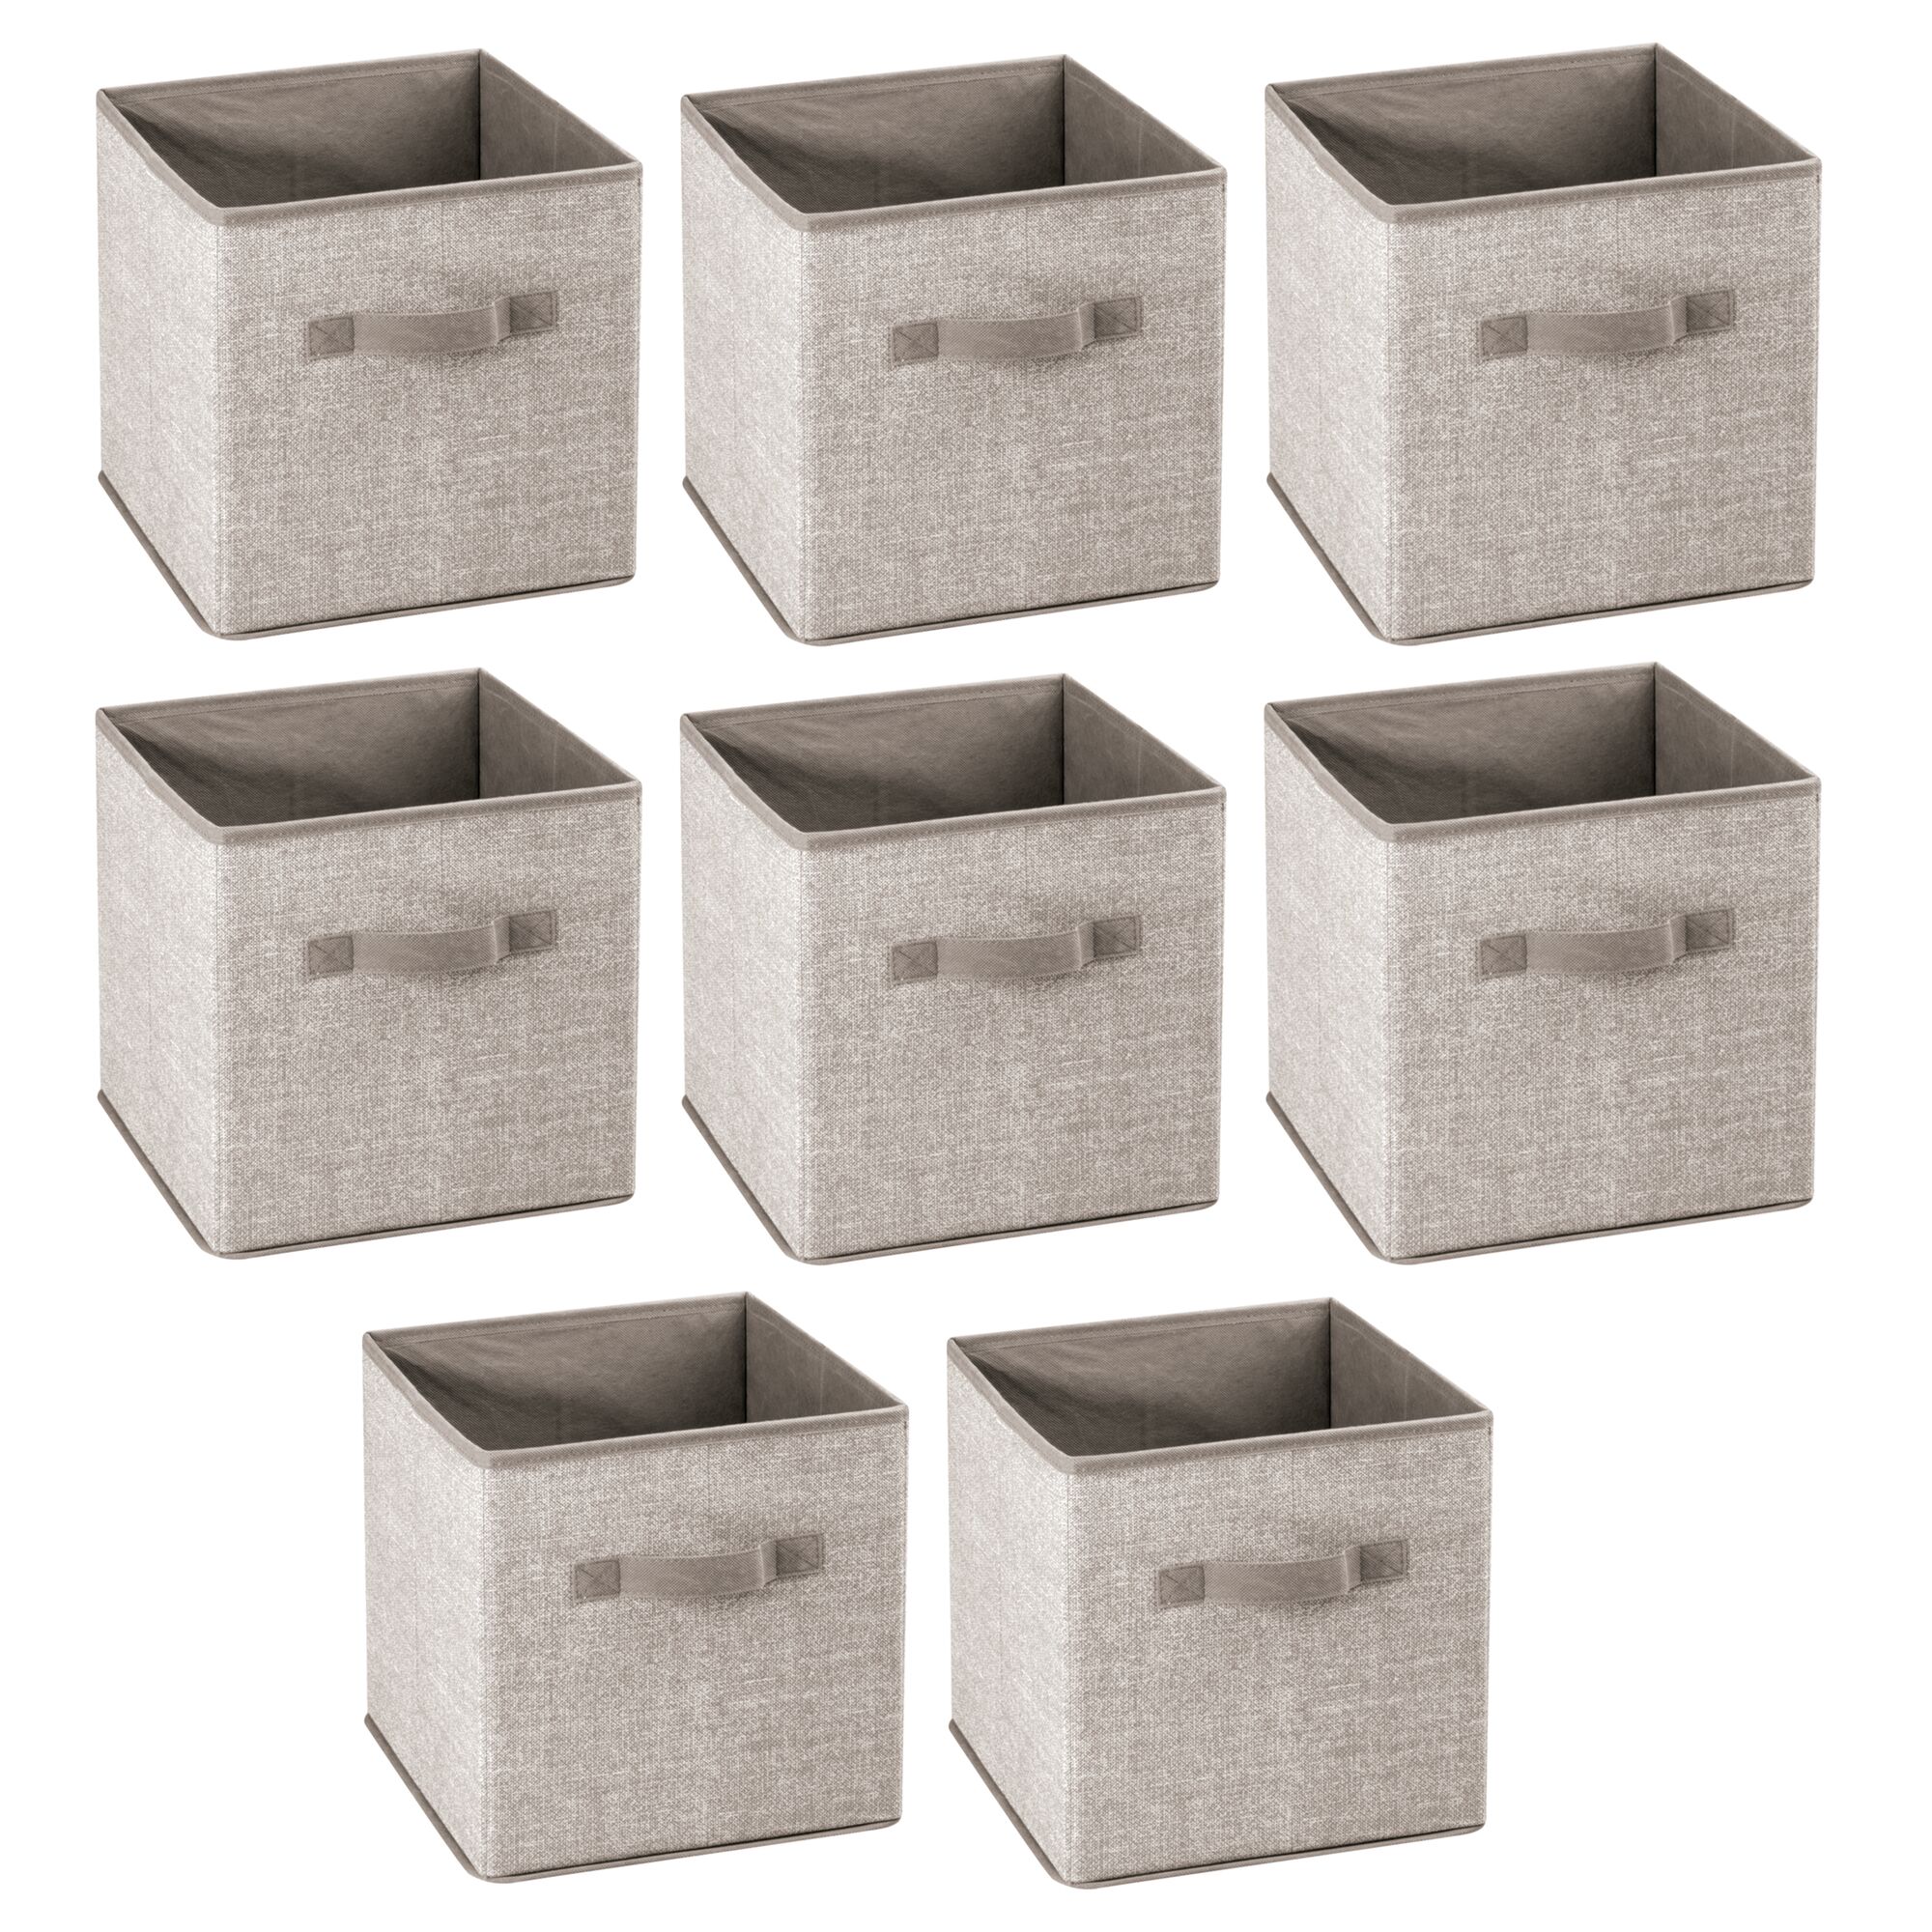 mDesign Small Soft Fabric Closet Organizer Cube Bin Box - Front Handle